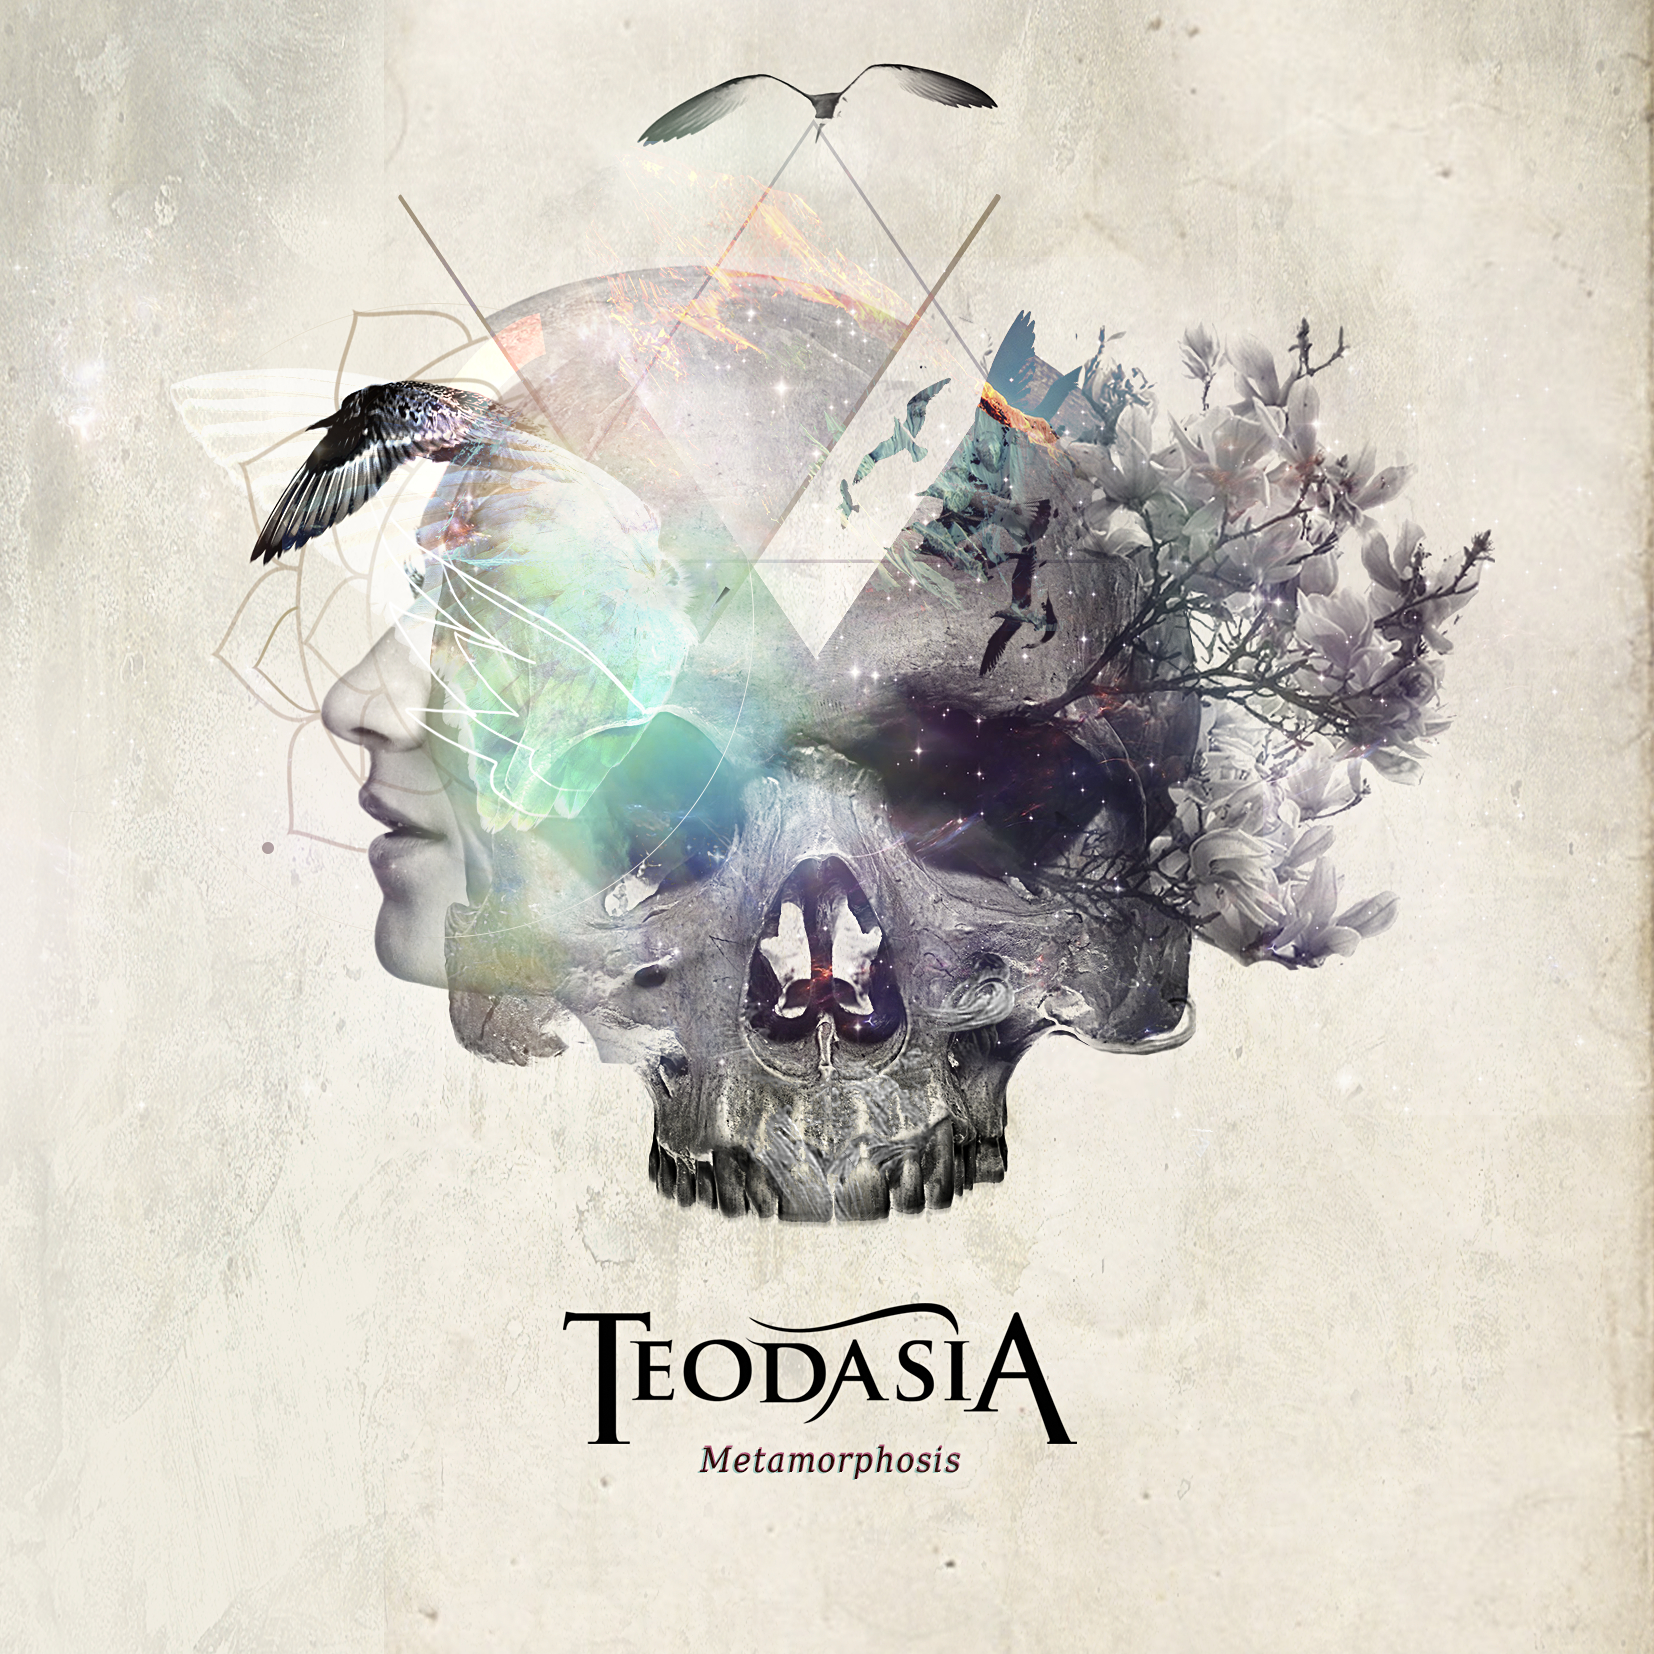 TEODASIA: Long awaited Studio Album ‘Metamorphosis’ out on October 10